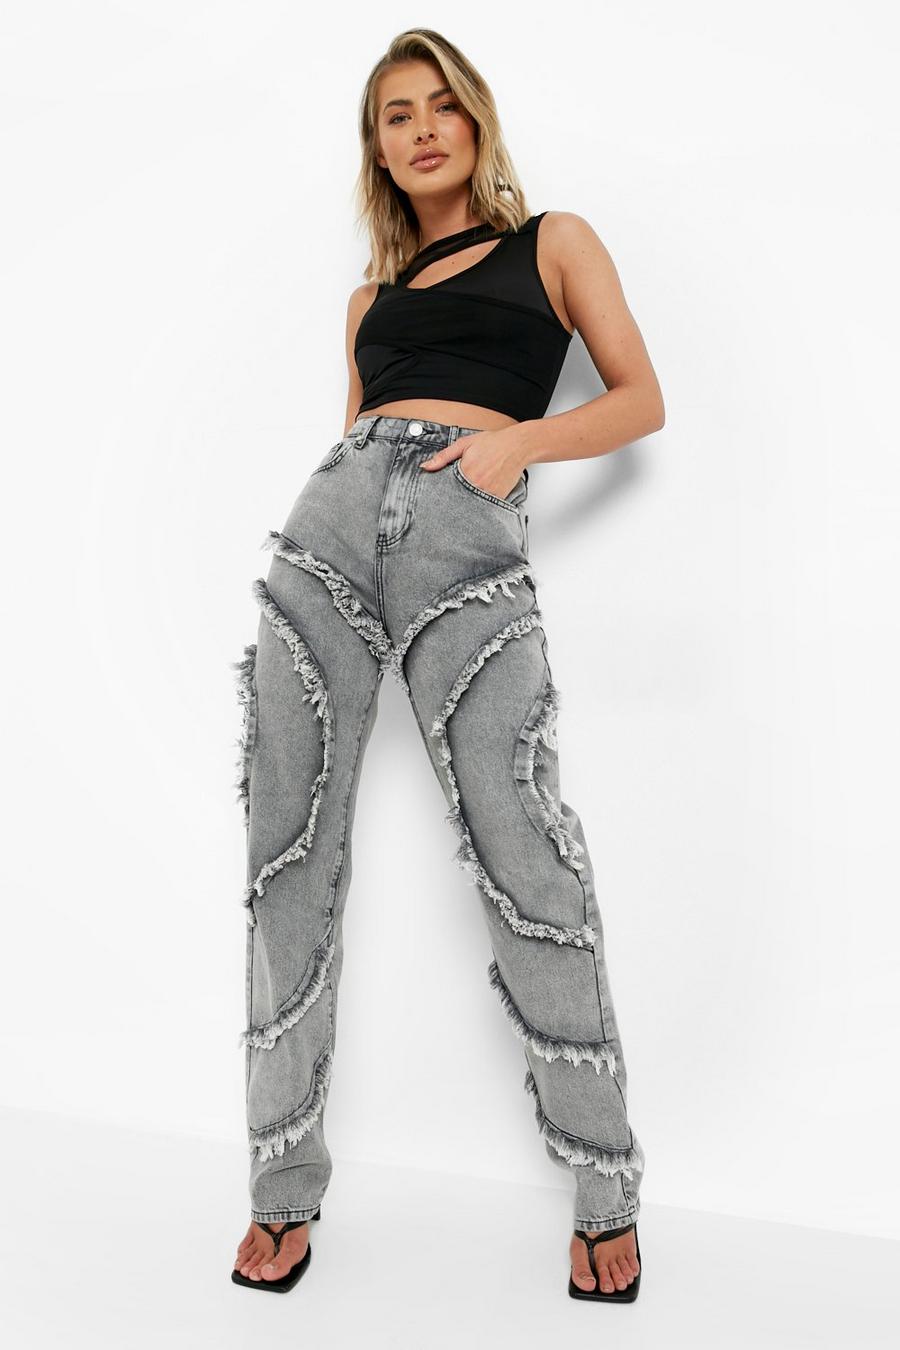 https://media.boohoo.com/i/boohoo/gzz05763_grey_xl/female-grey-frayed-seam-detail-straight-fit-jeans/?w=900&qlt=default&fmt.jp2.qlt=70&fmt=auto&sm=fit